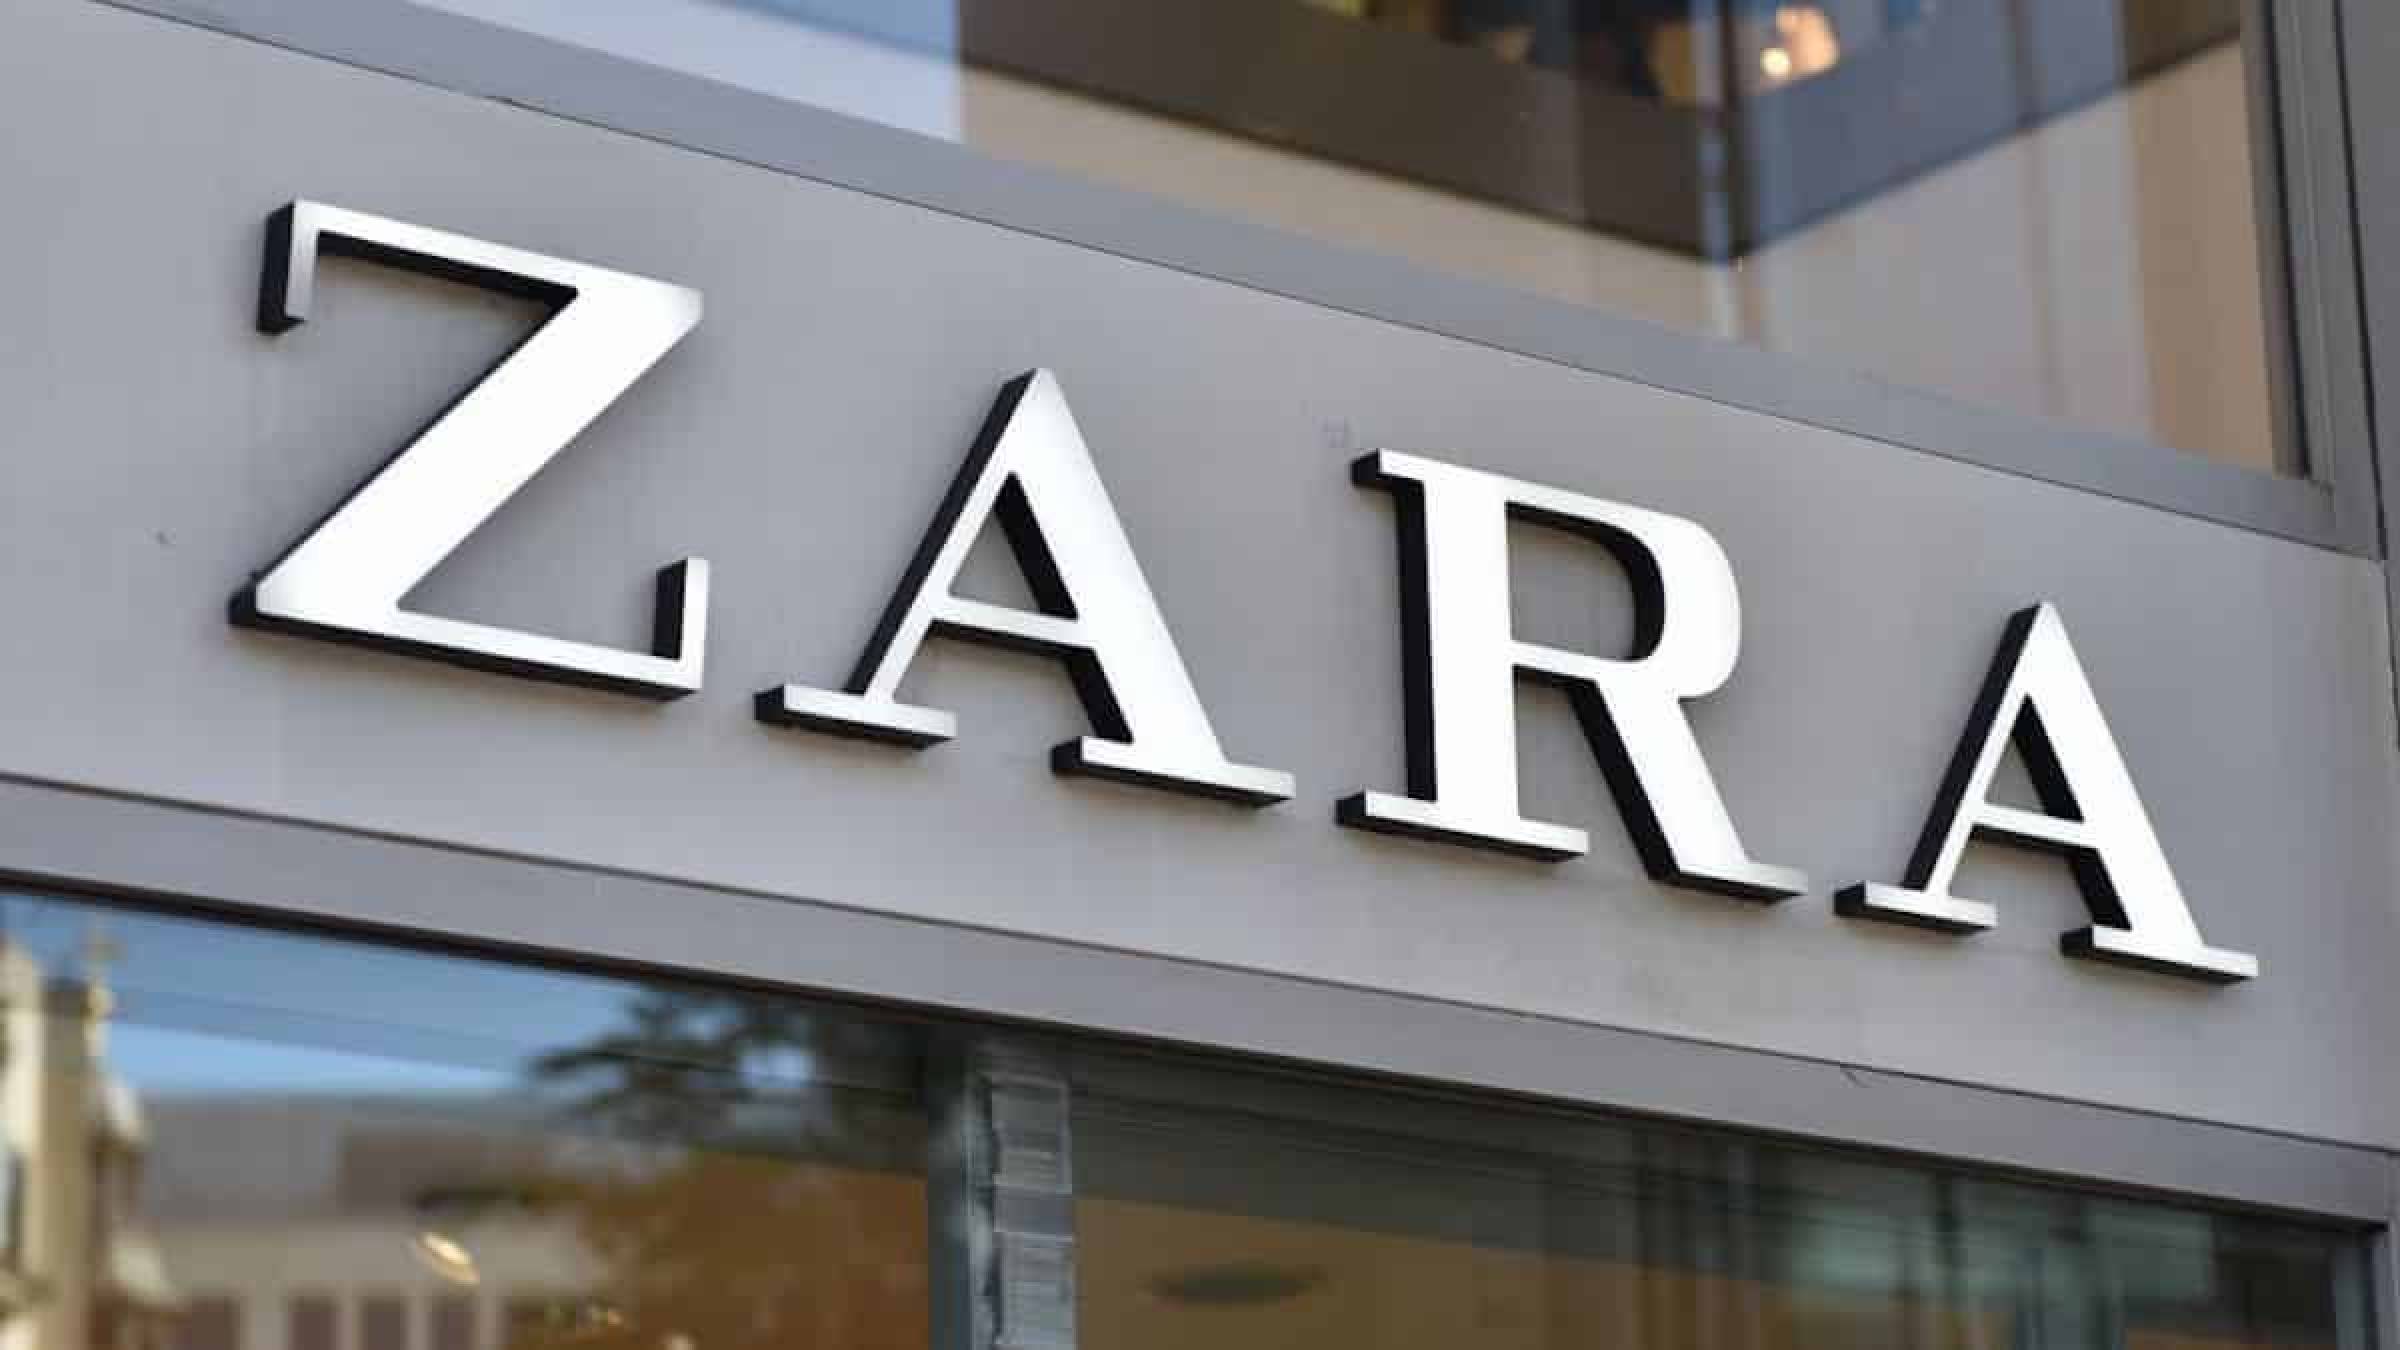 Zara New York